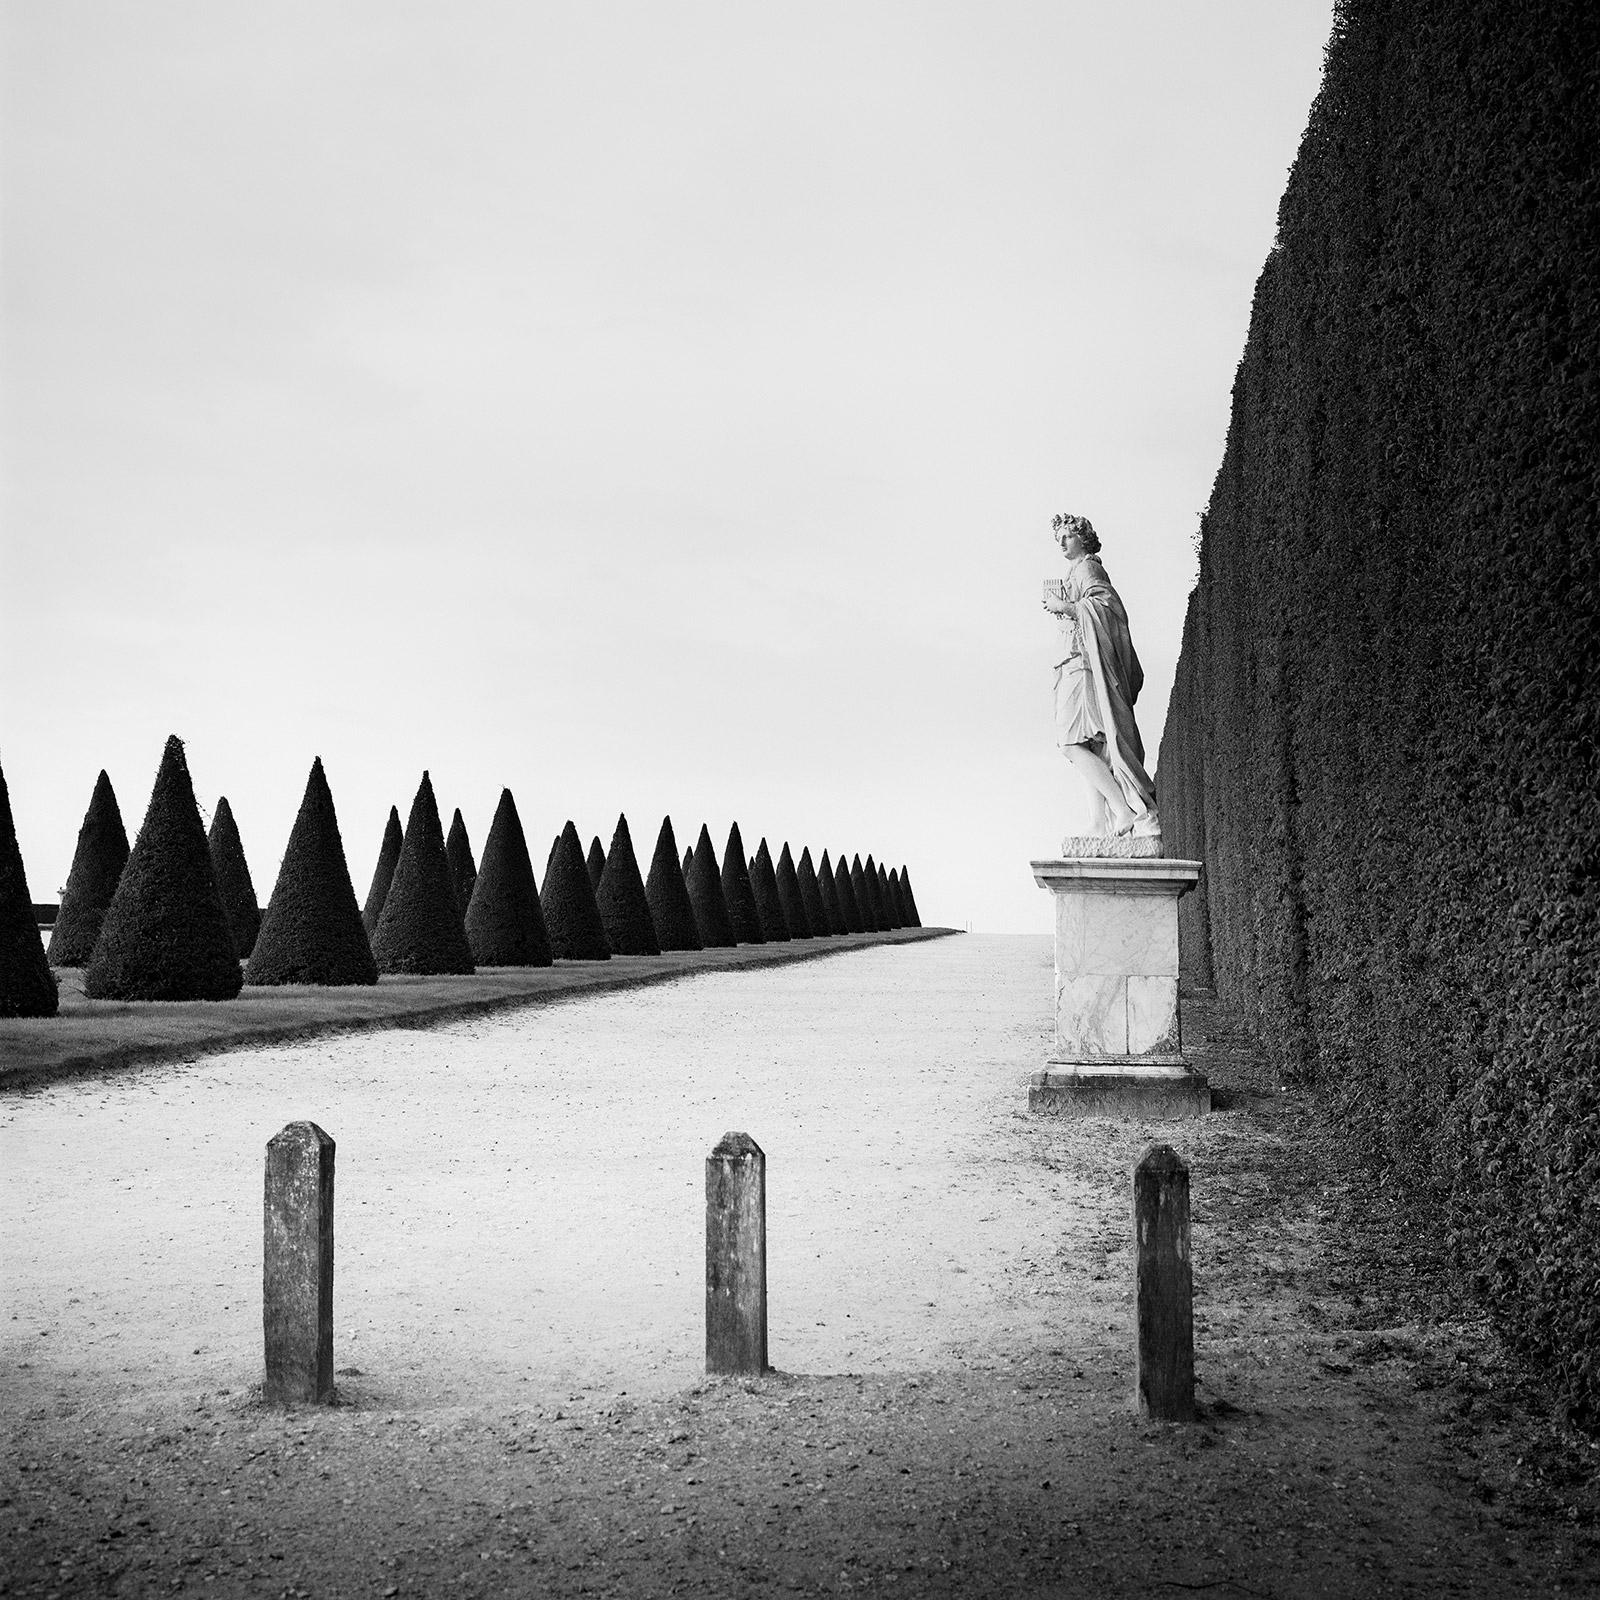 Gerald Berghammer Landscape Photograph - The Garden of Versailles, Paris, France, black and white landscape photography